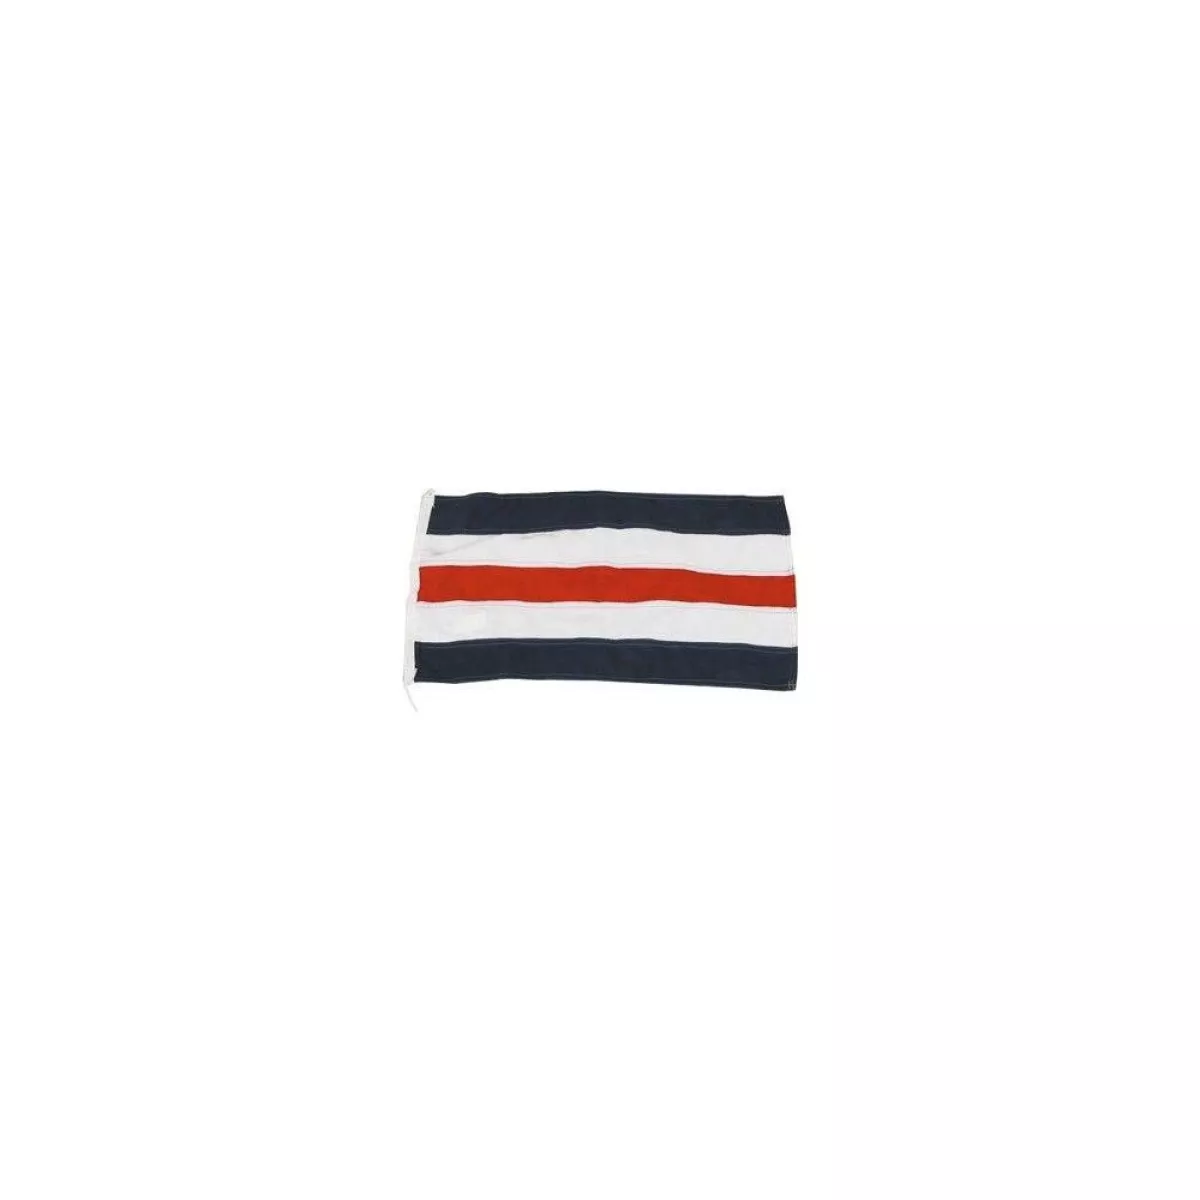 #1 - JA/C Internationalt signalflag, 30x45 cm